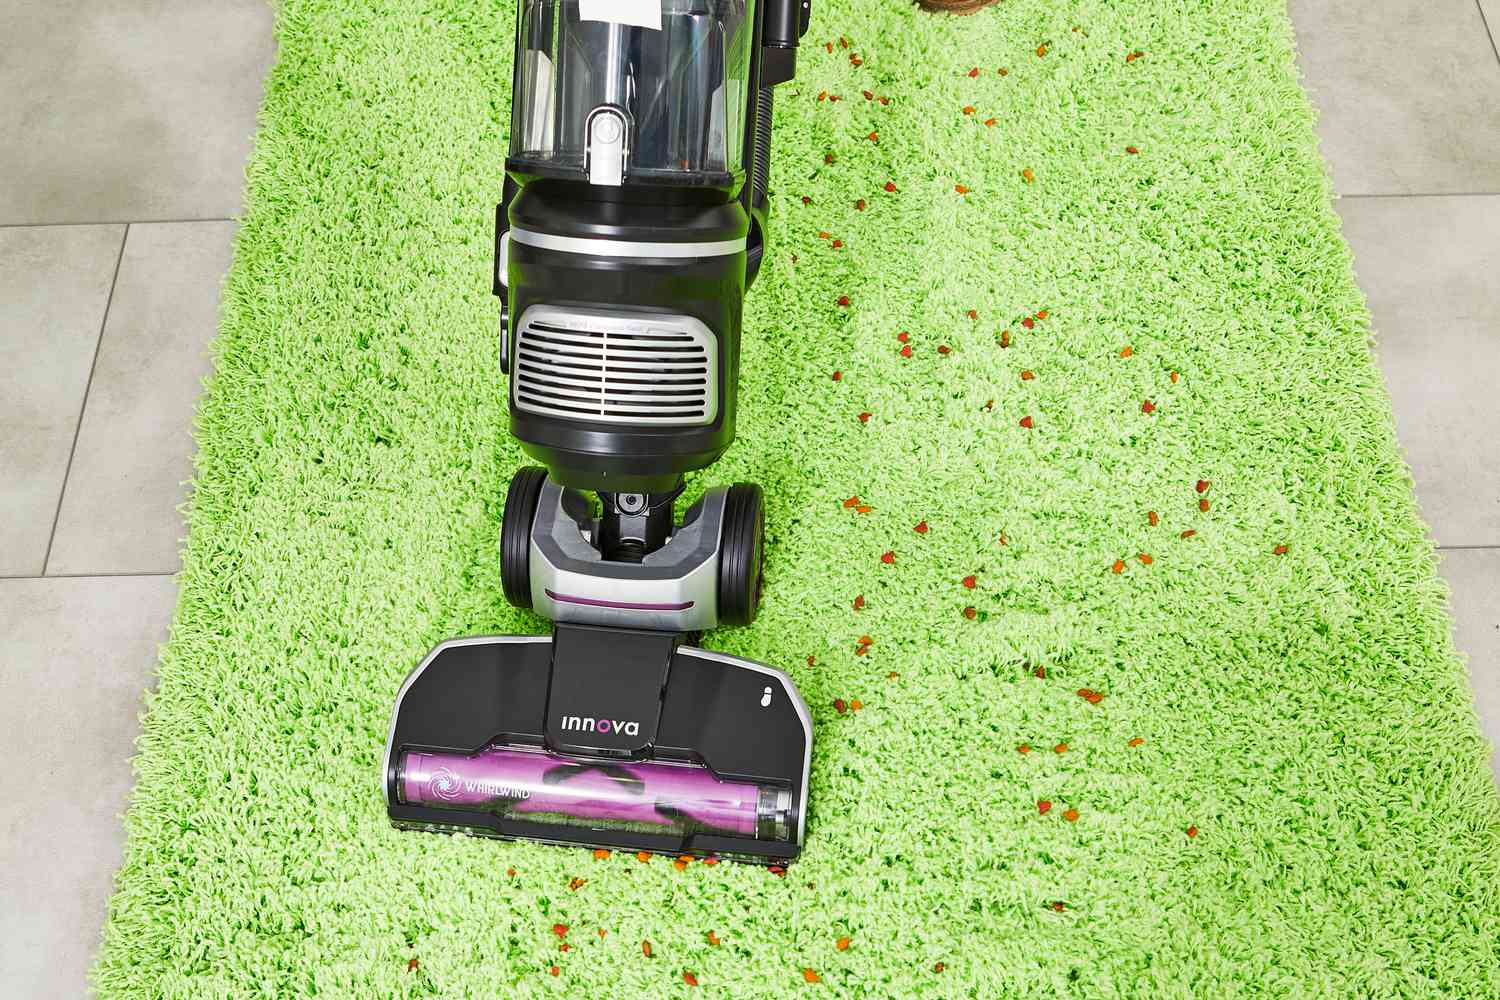 Eureka NEU700 Innova Upright Vacuum used to clean the spill on the green carpet